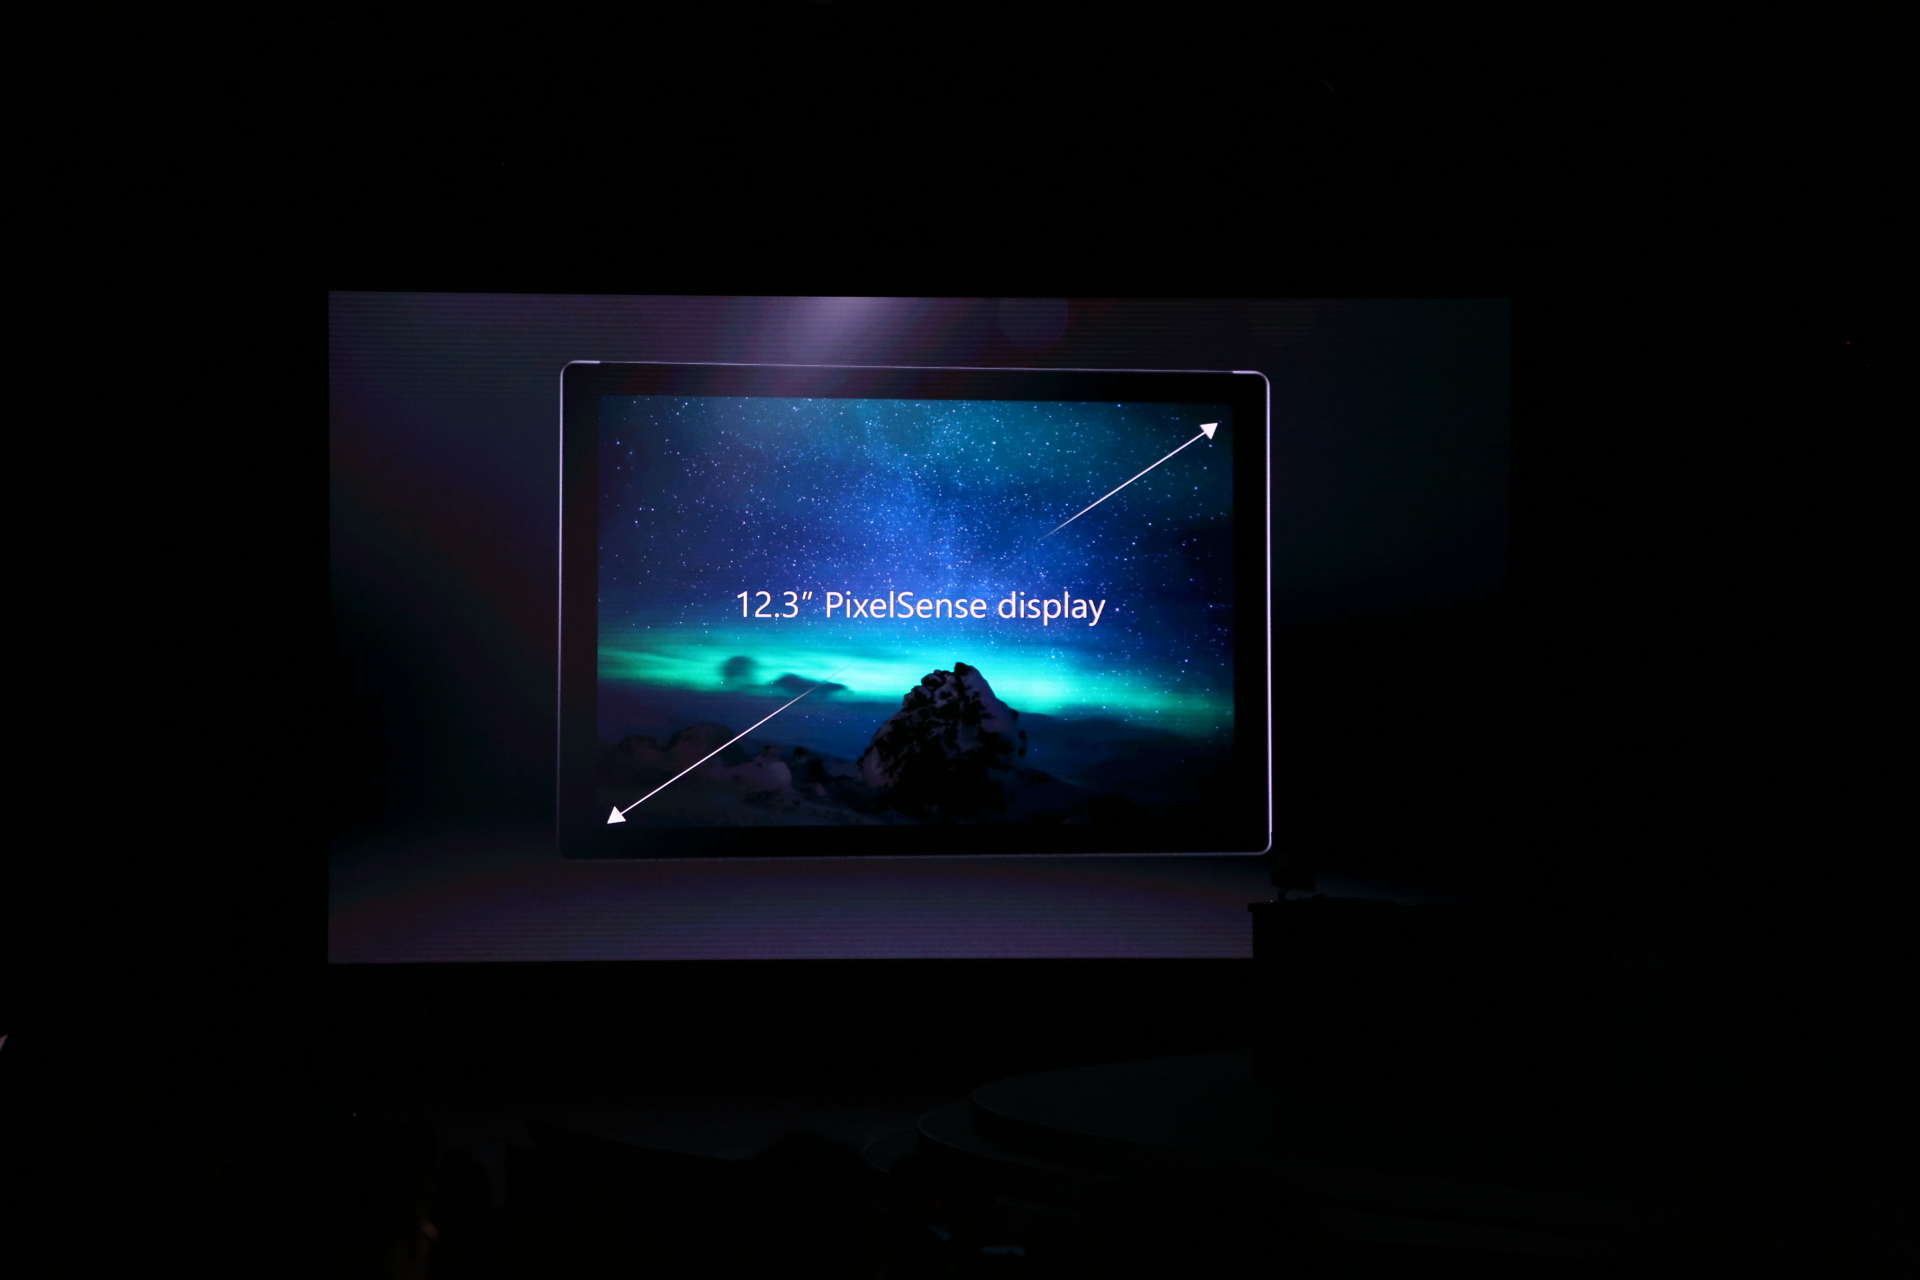 Microsoft Surface Pro 4: Bigger Screen, Faster Guts